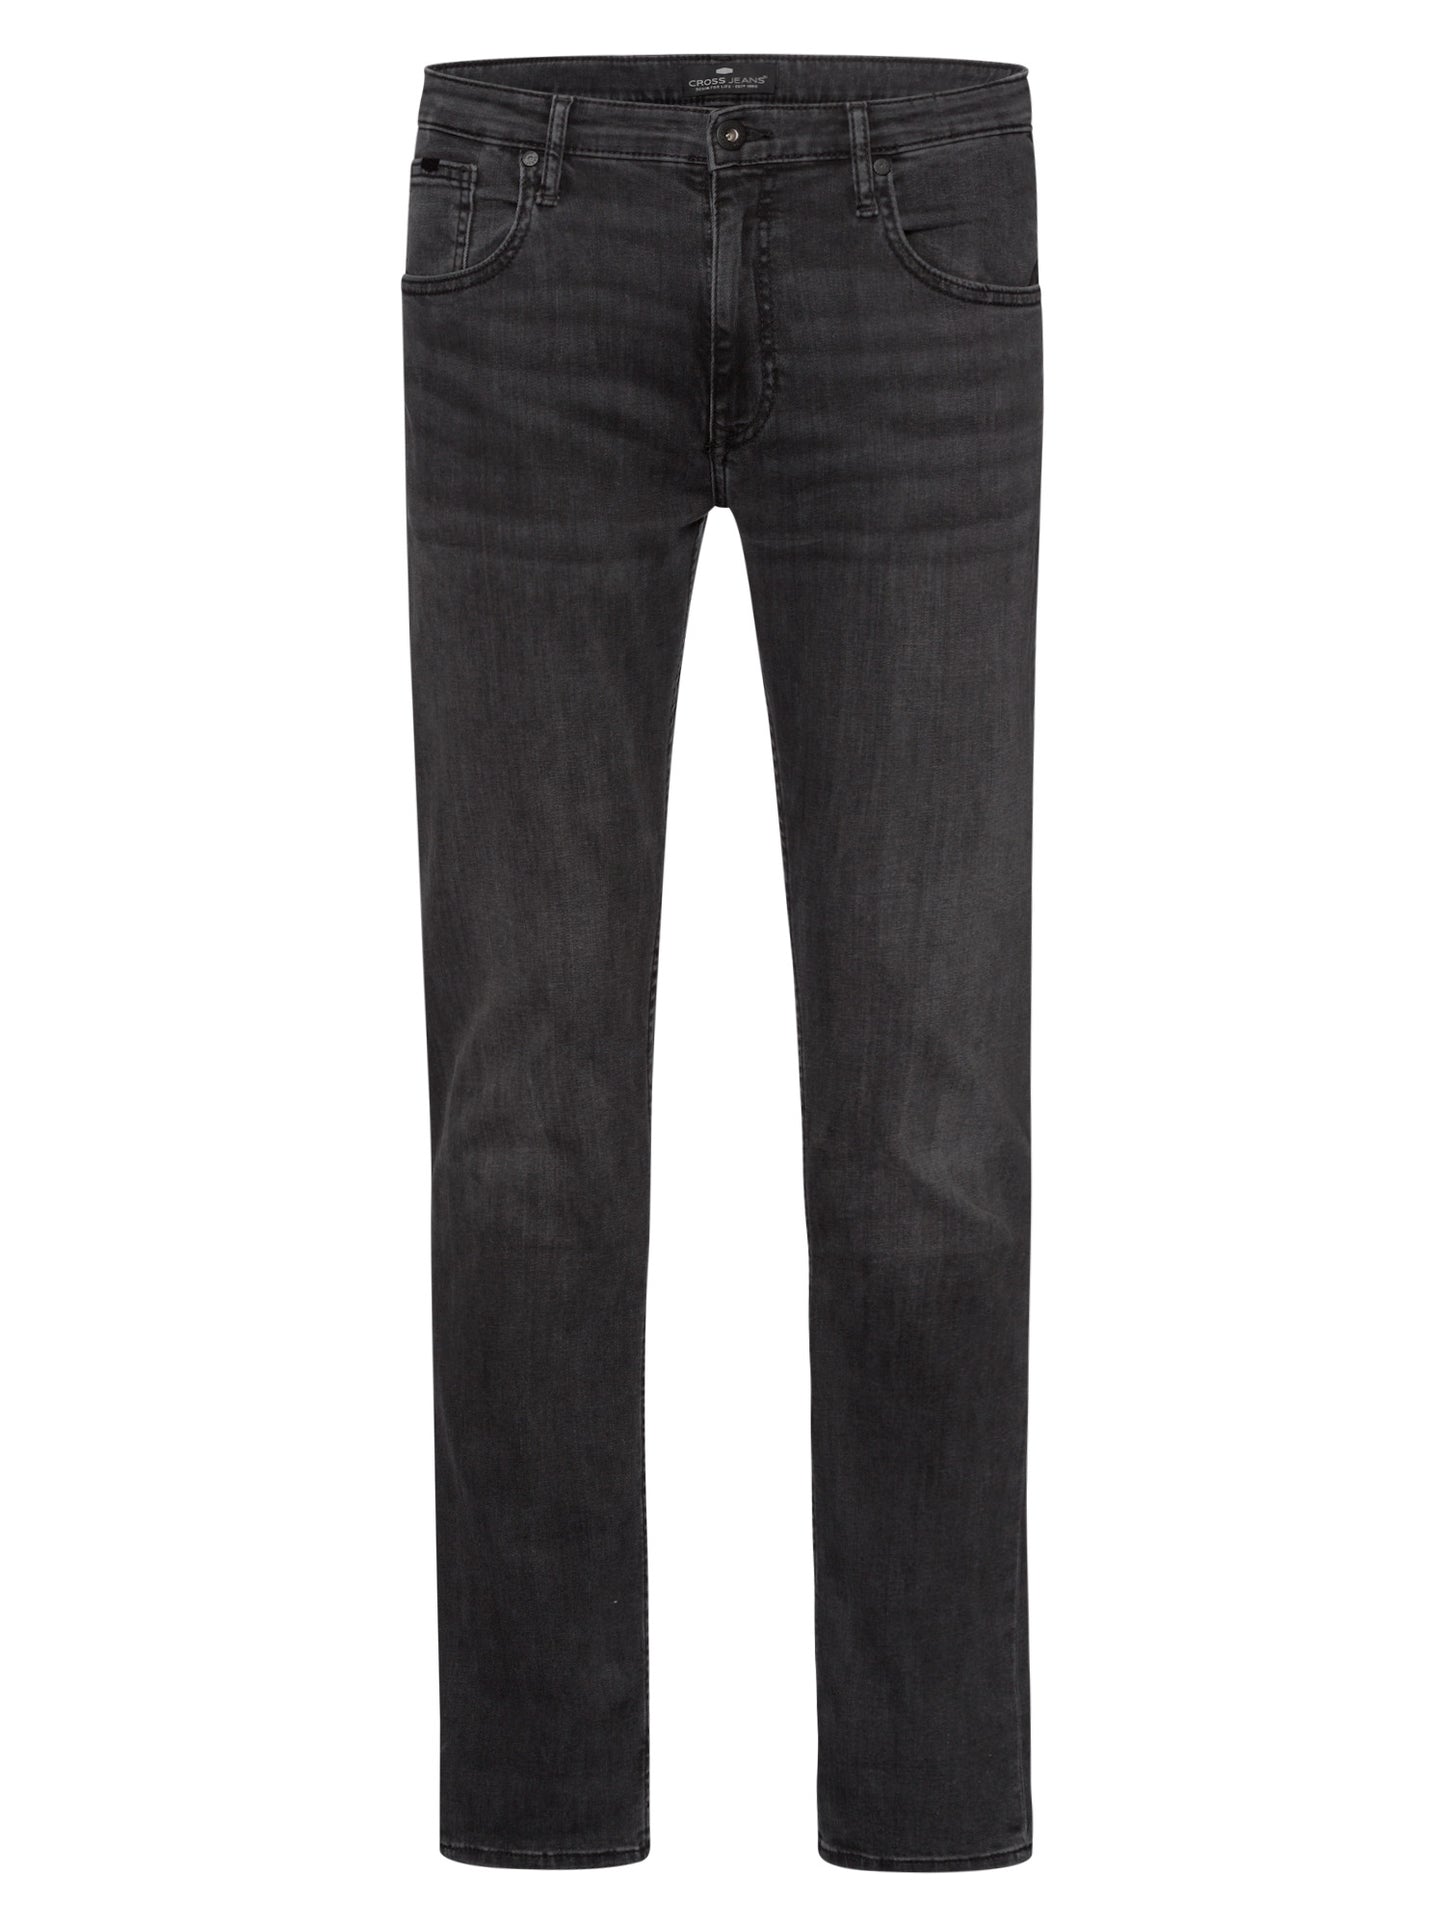 Damien men's jeans slim fit regular waist straight leg anthracite grey